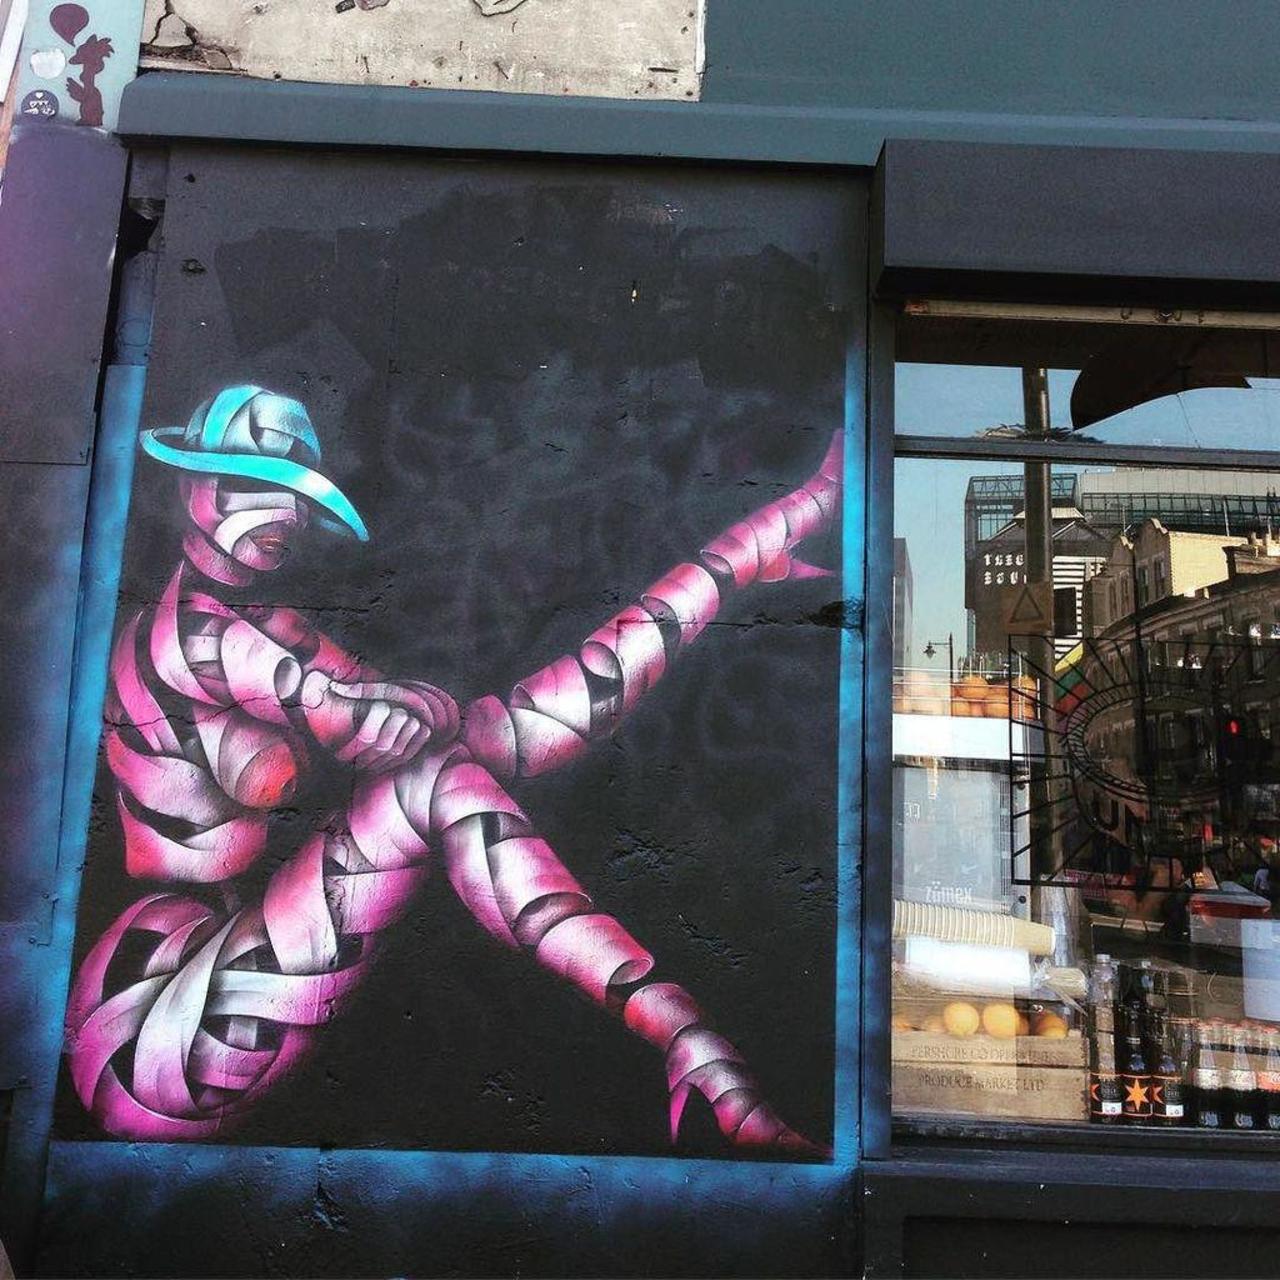 RT @artpushr: via #17mayestreet "http://bit.ly/1FWAKmK" #graffiti #streetart http://t.co/32AuK1jRs7